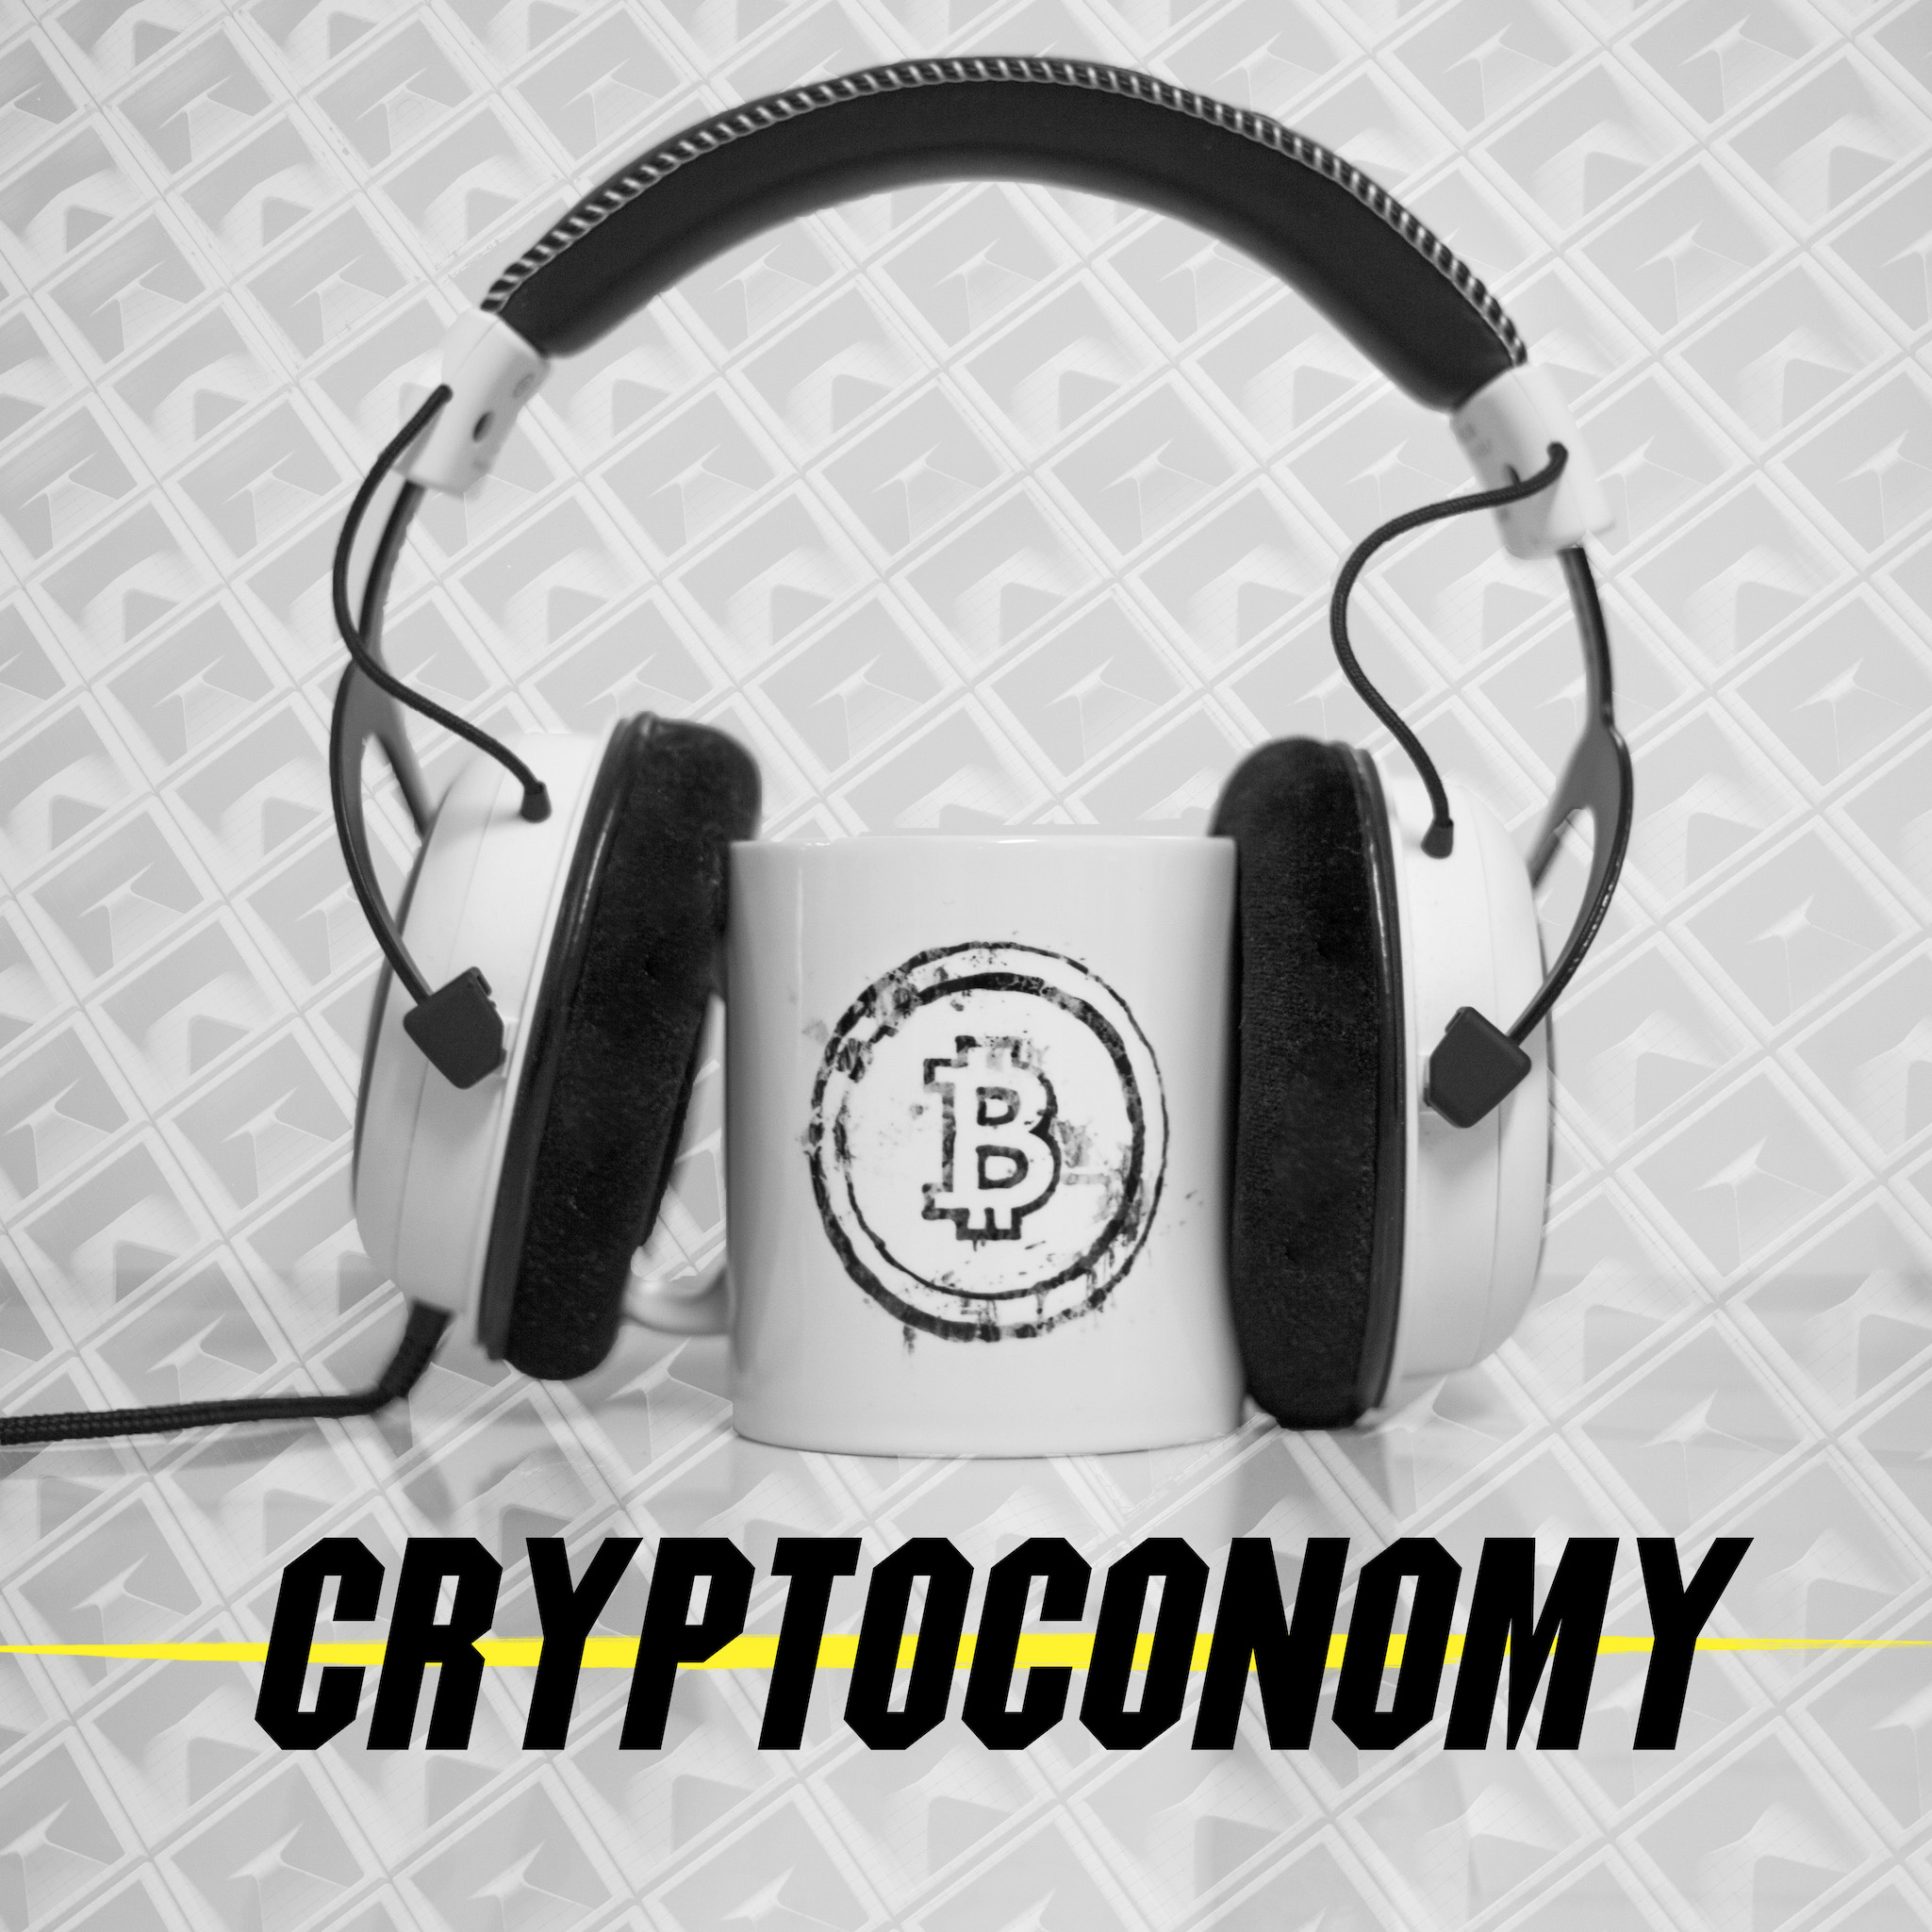 CryptoQuikRead_125 - Why Money Has Value & Spending Bitcoin is Senseless